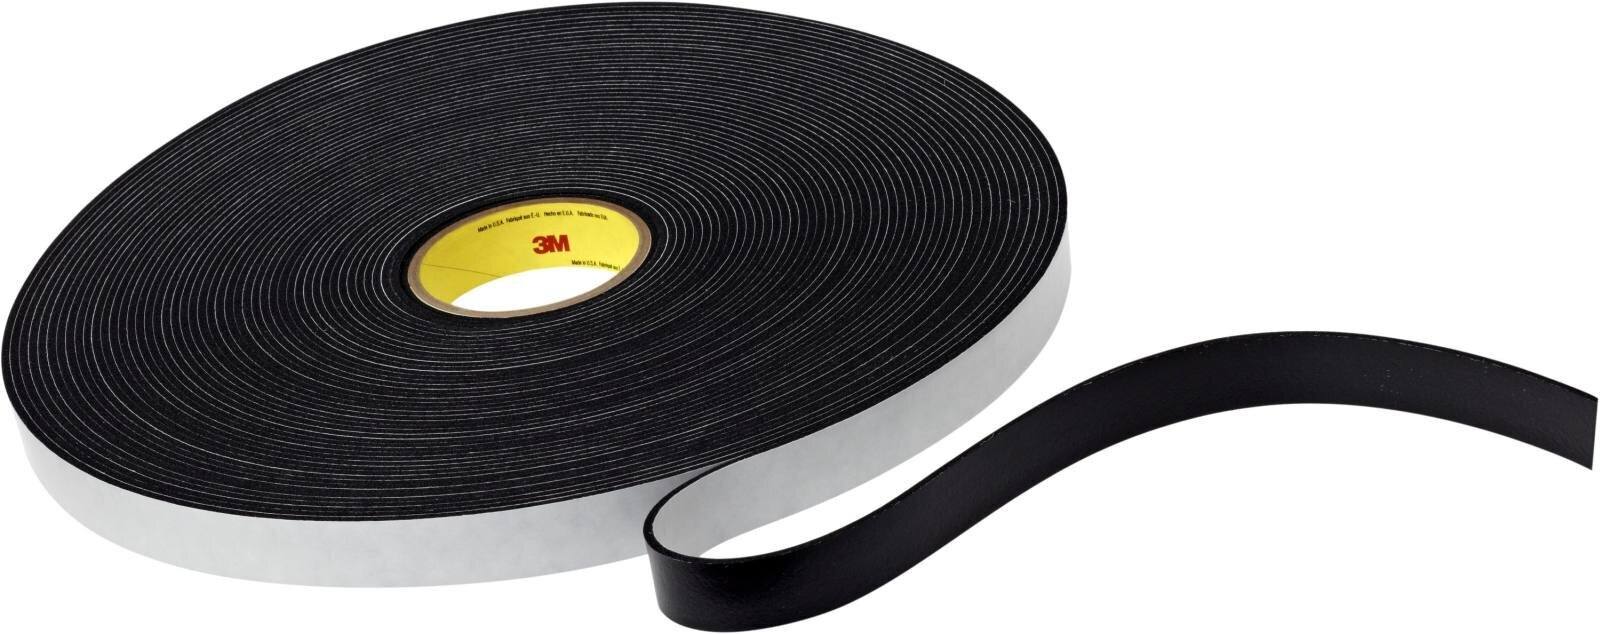 3M Single-sided vinyl foam adhesive tape 4718, black, 12 mm x 33 m, 3.2 mm